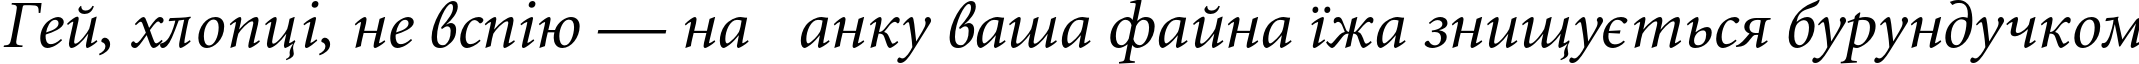 Пример написания шрифтом Miniature Italic текста на украинском